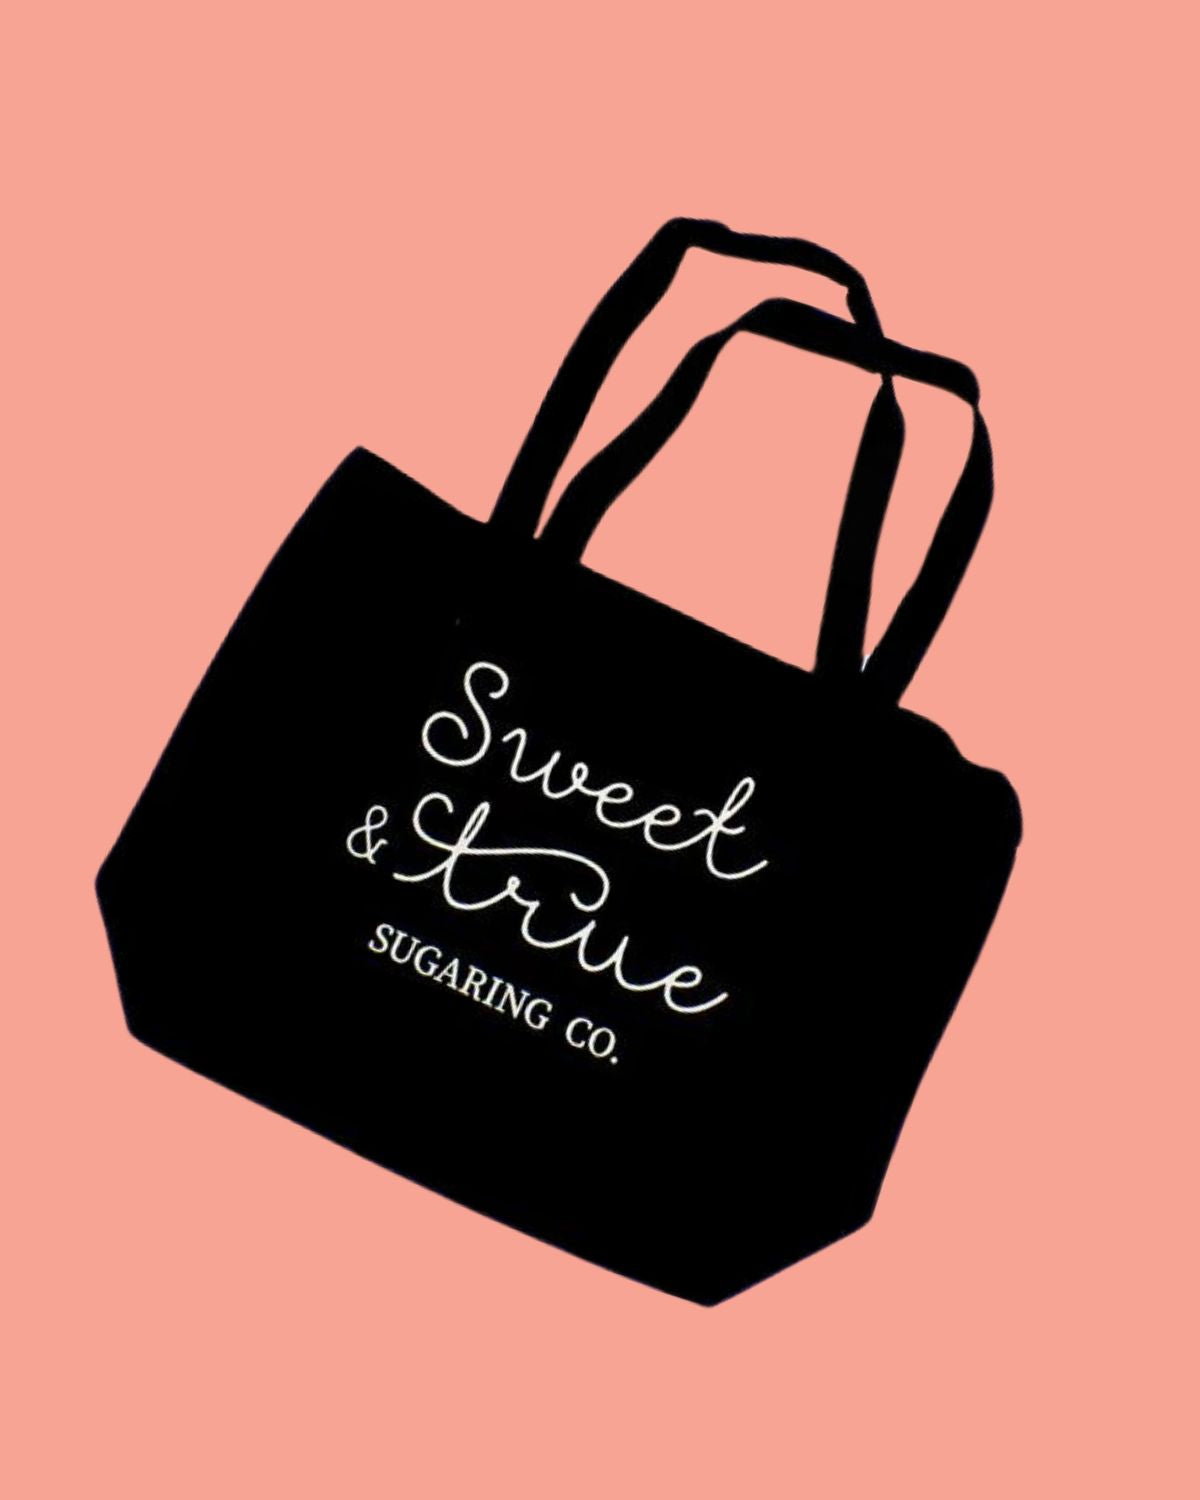 Sweet & True Sugaring Canvas Tote Bag